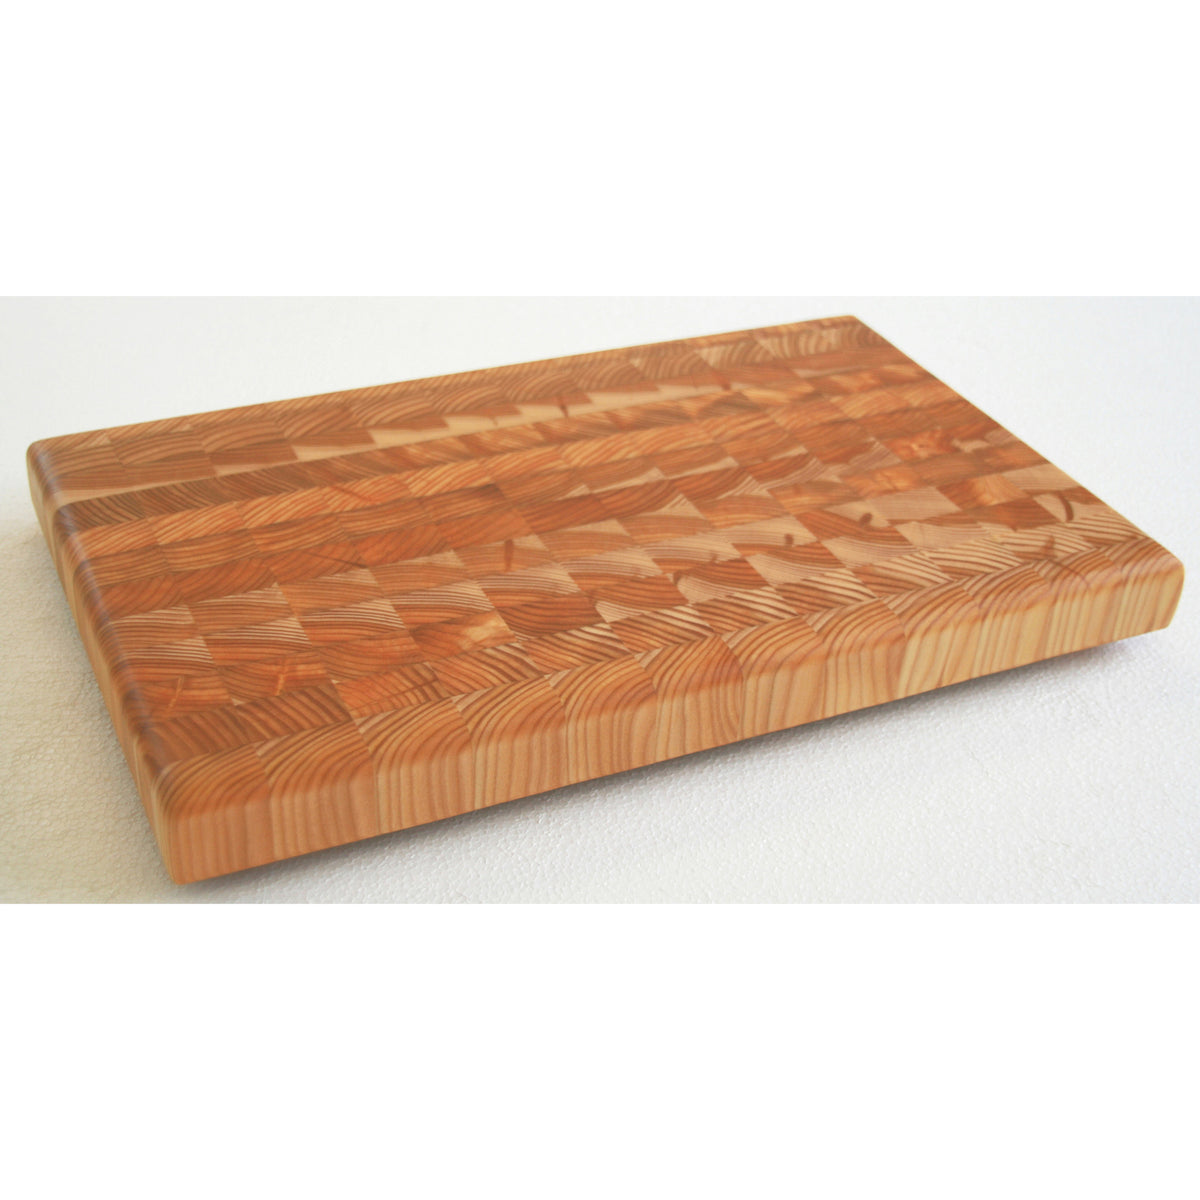 Larchwood LG Large Original Cutting Board